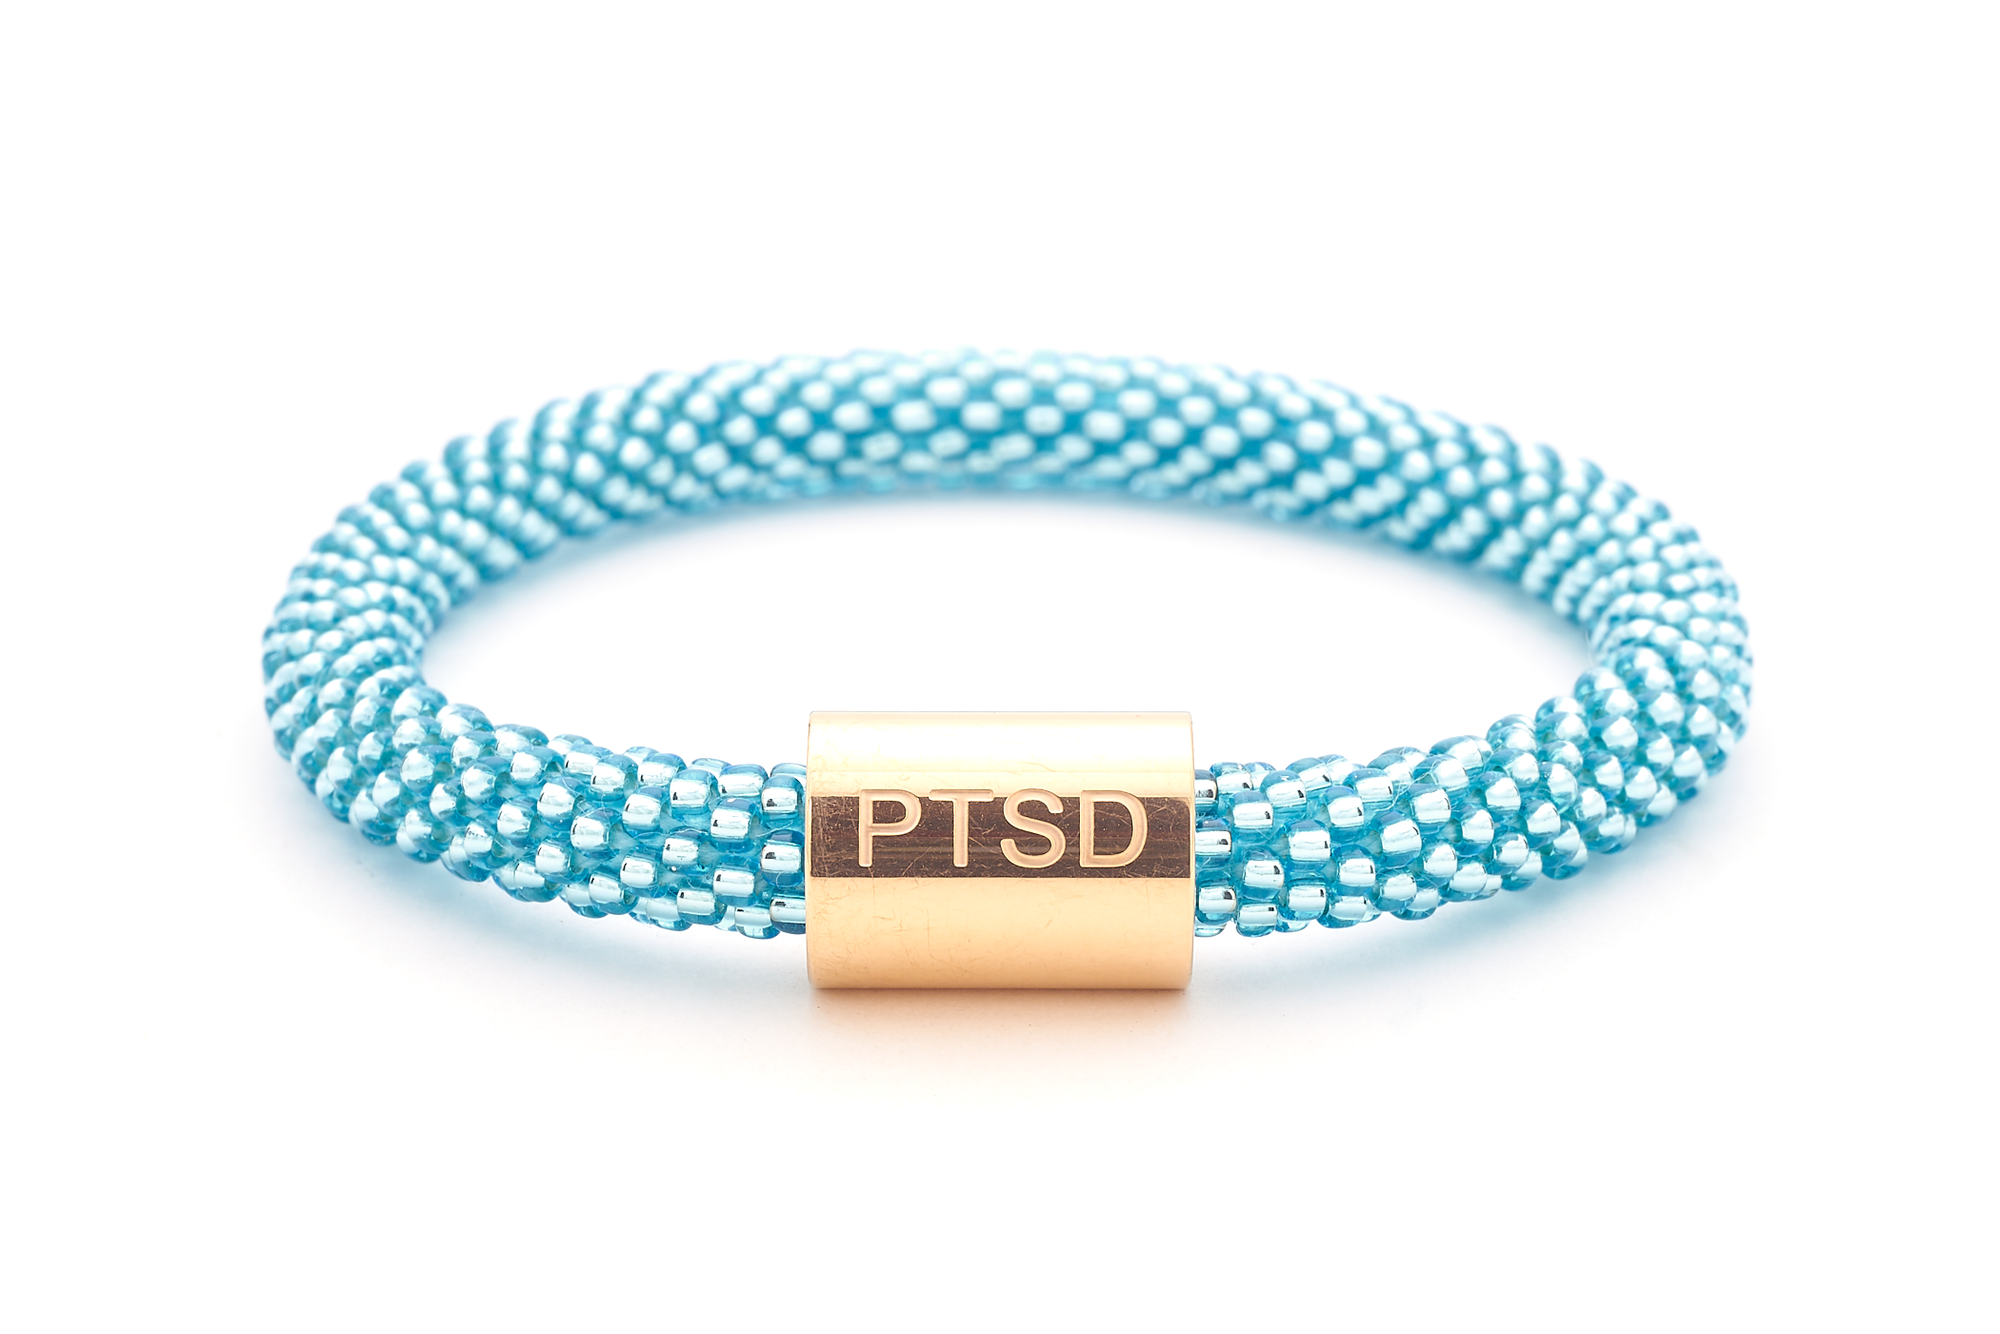 Sashka Co. Extended 8" Bracelet Metallic Blue / w Gold PTSD Charm PTSD Charm Bracelet - Extended 8"